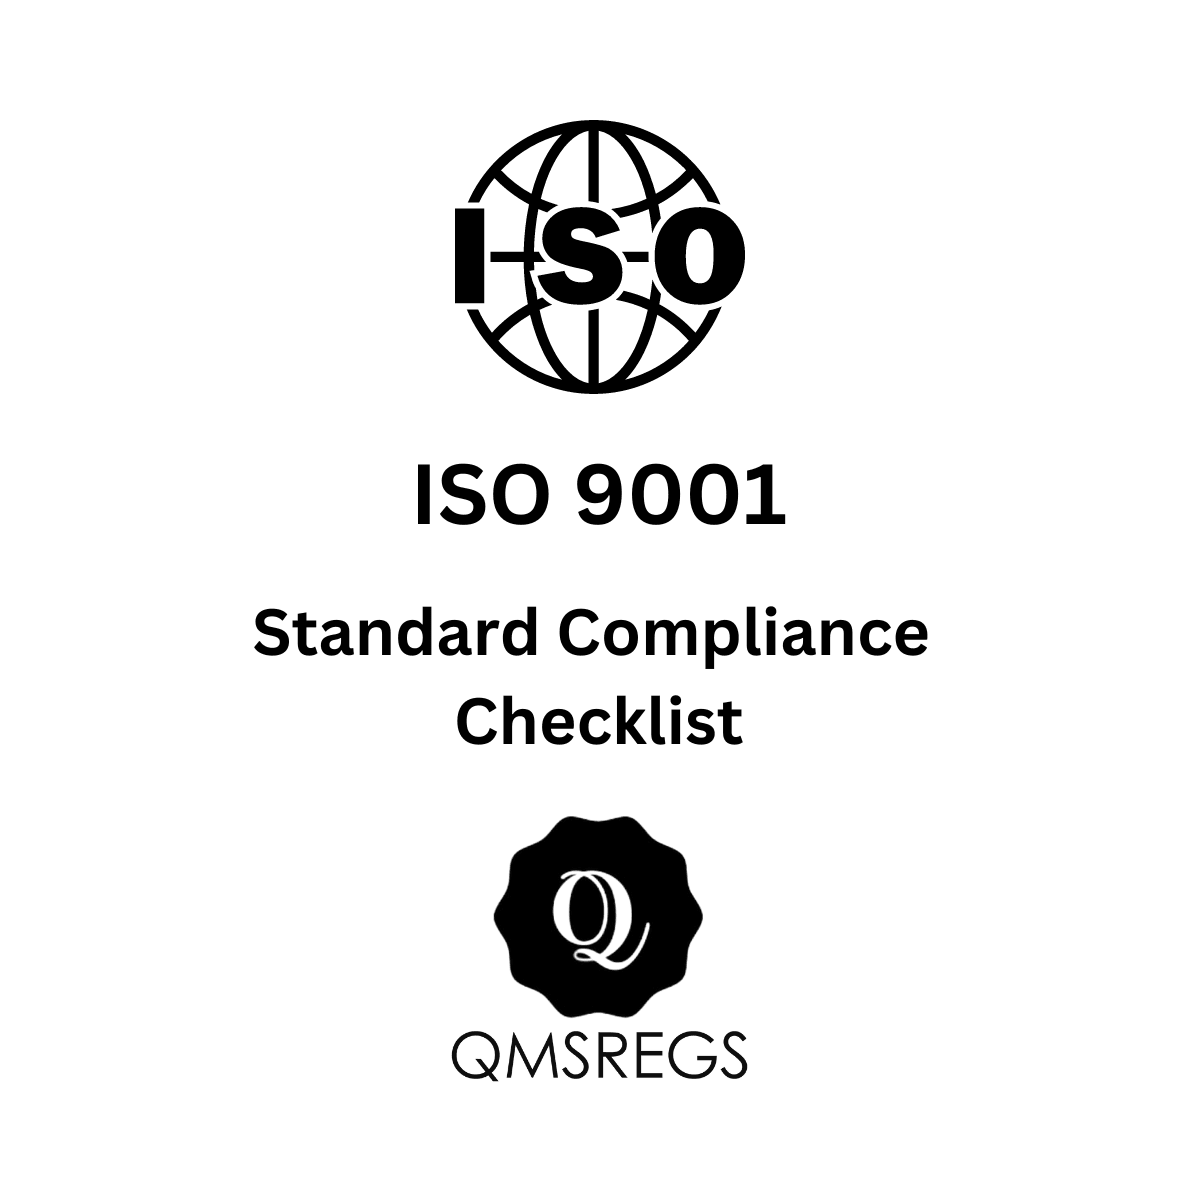 ISO 9001 standard compliance checklist